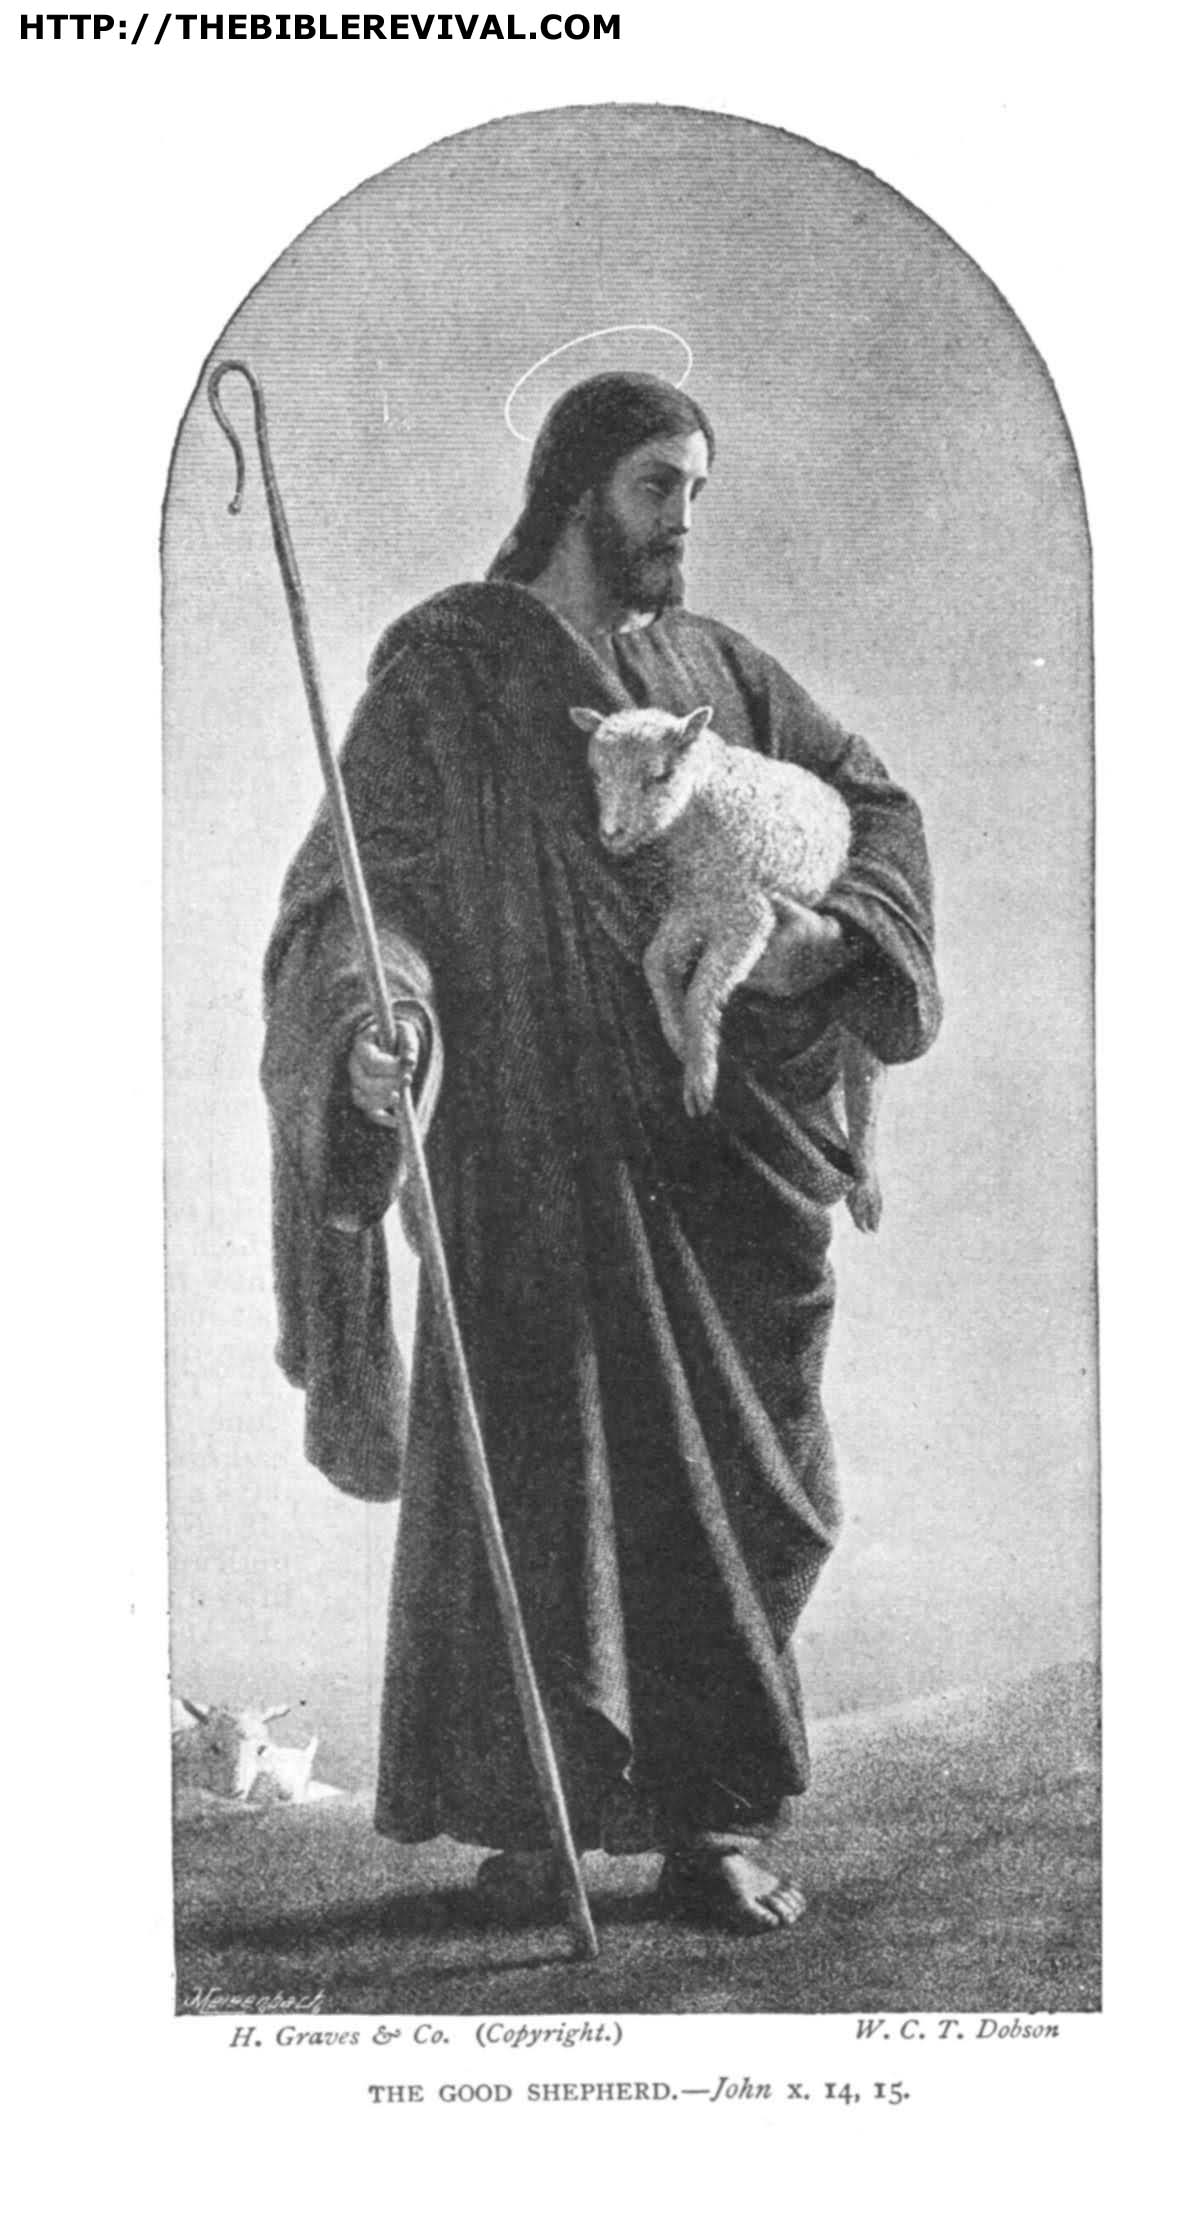 The Good Shepherd   William Charles Dobson